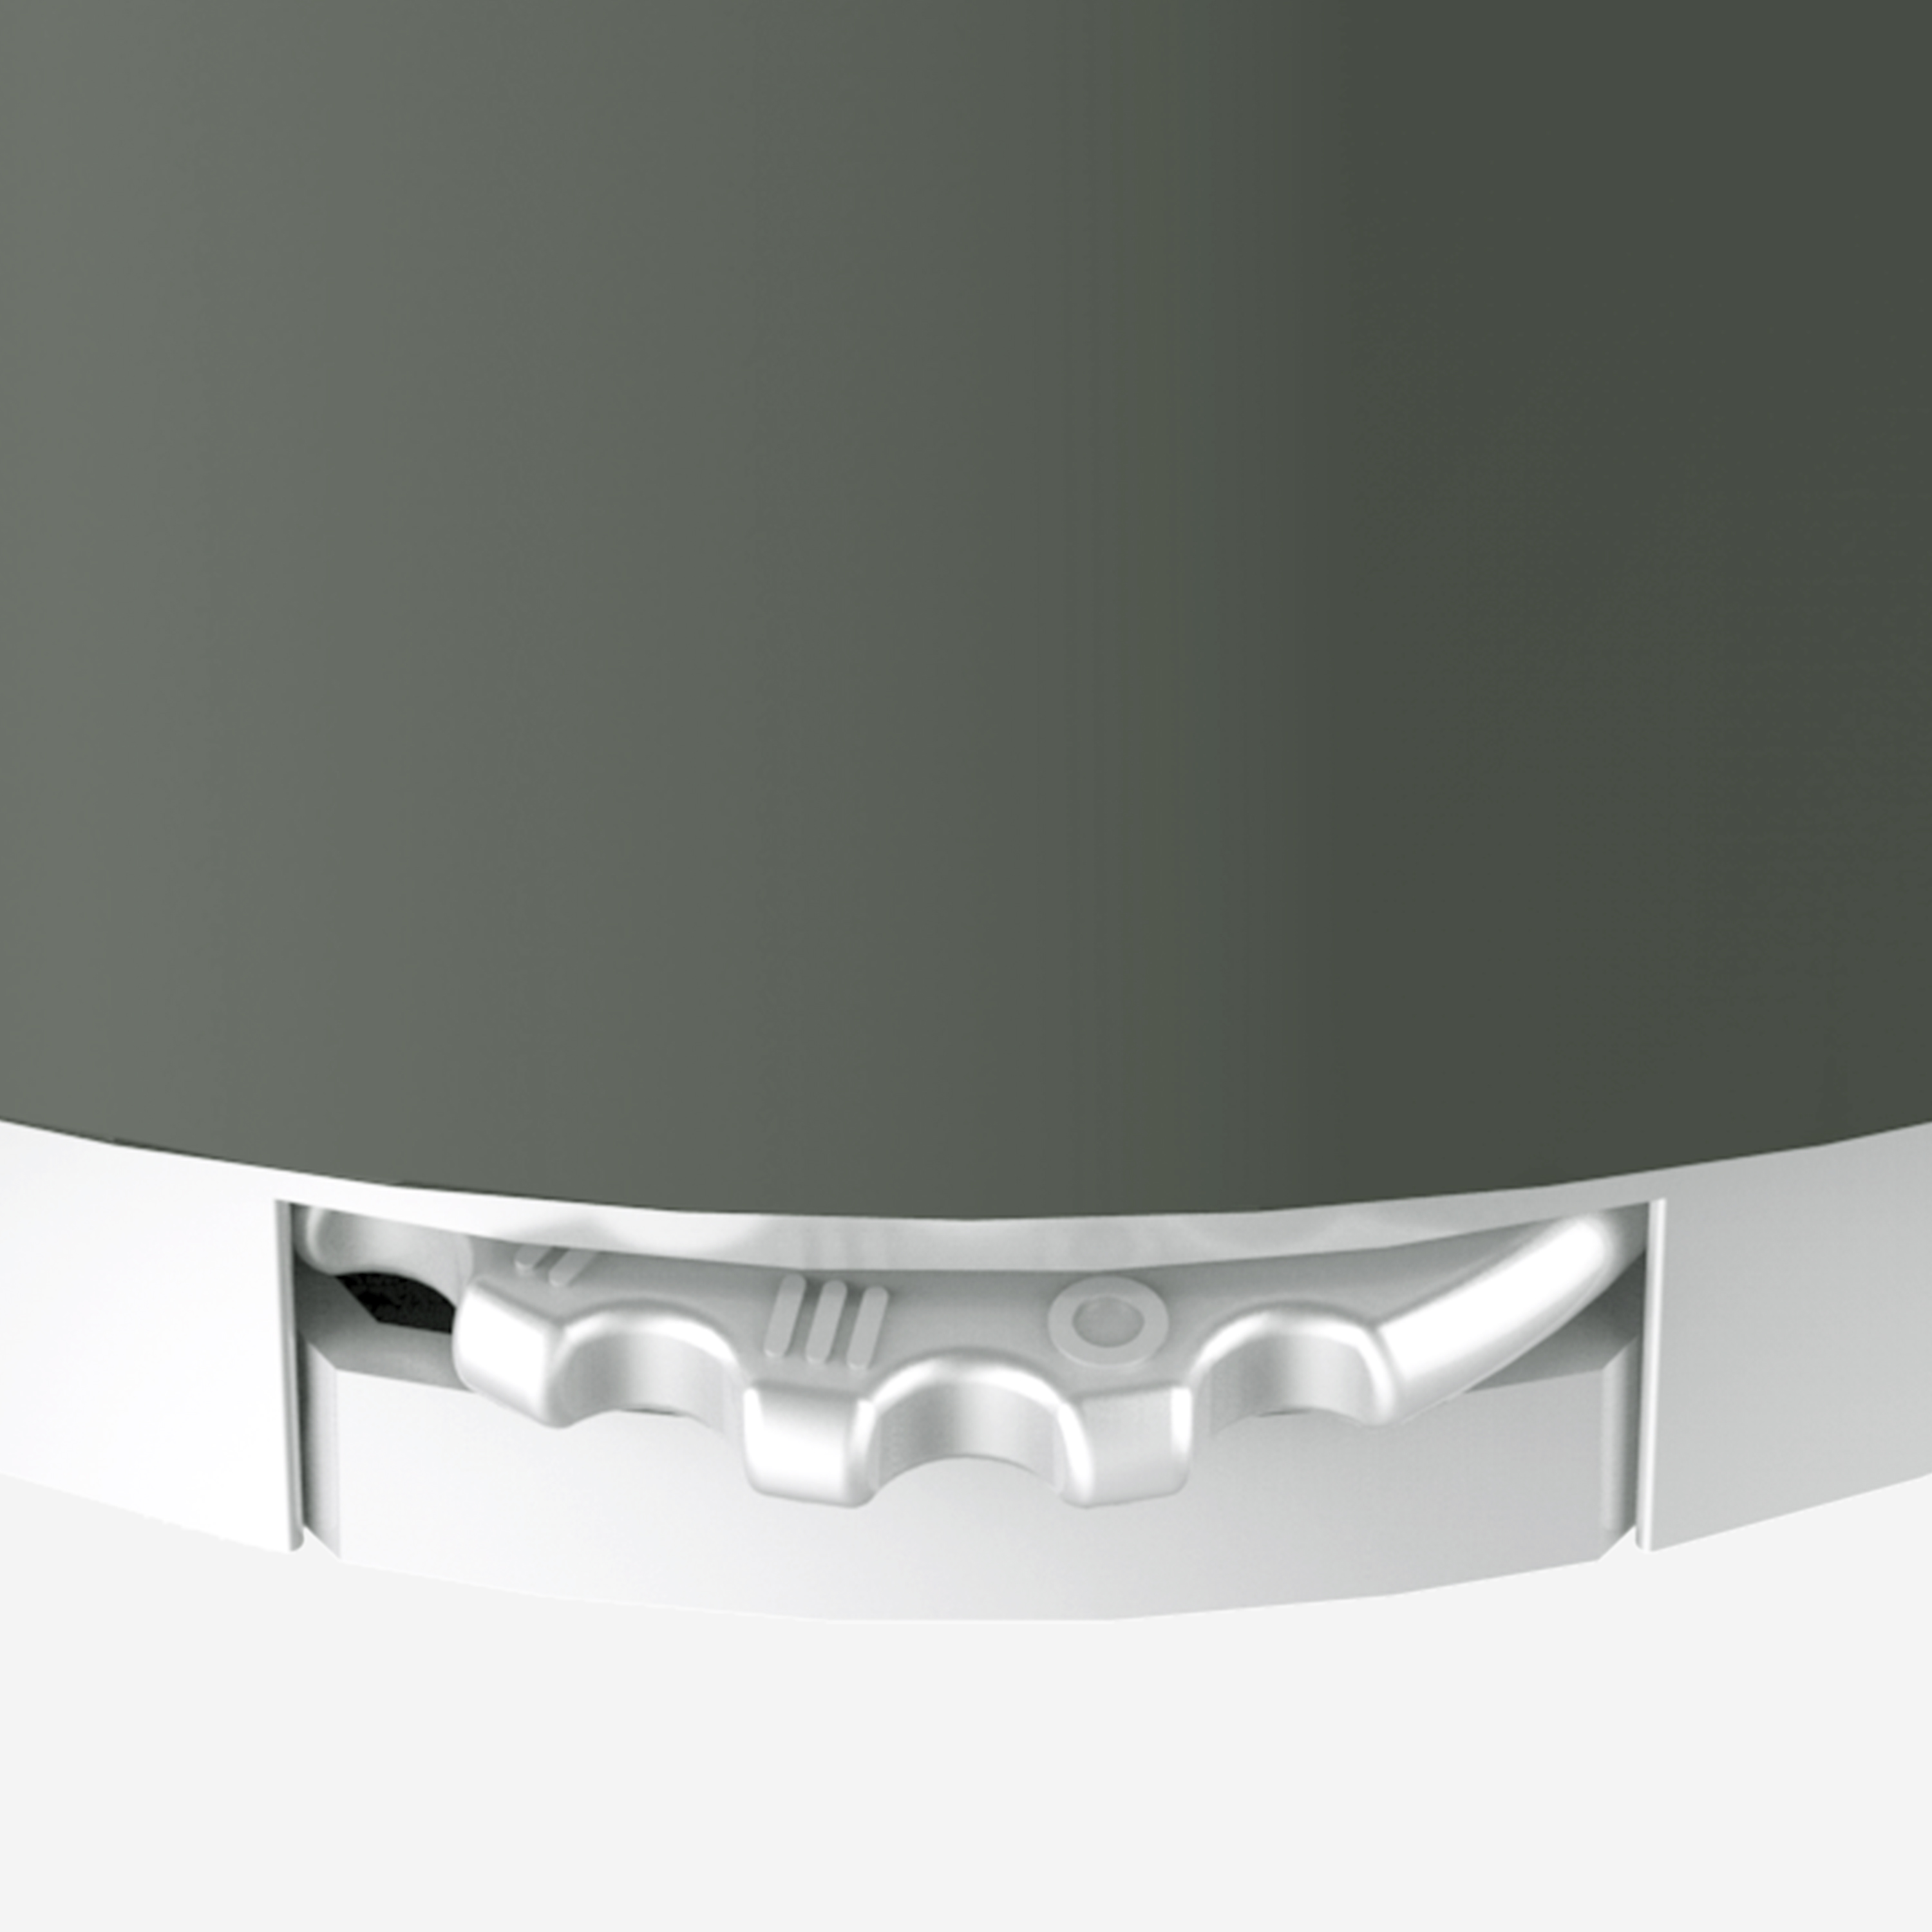 Vornado Flippi V10 Personal Oscillating Fan, 9.75", Graphite Gray - image 4 of 9